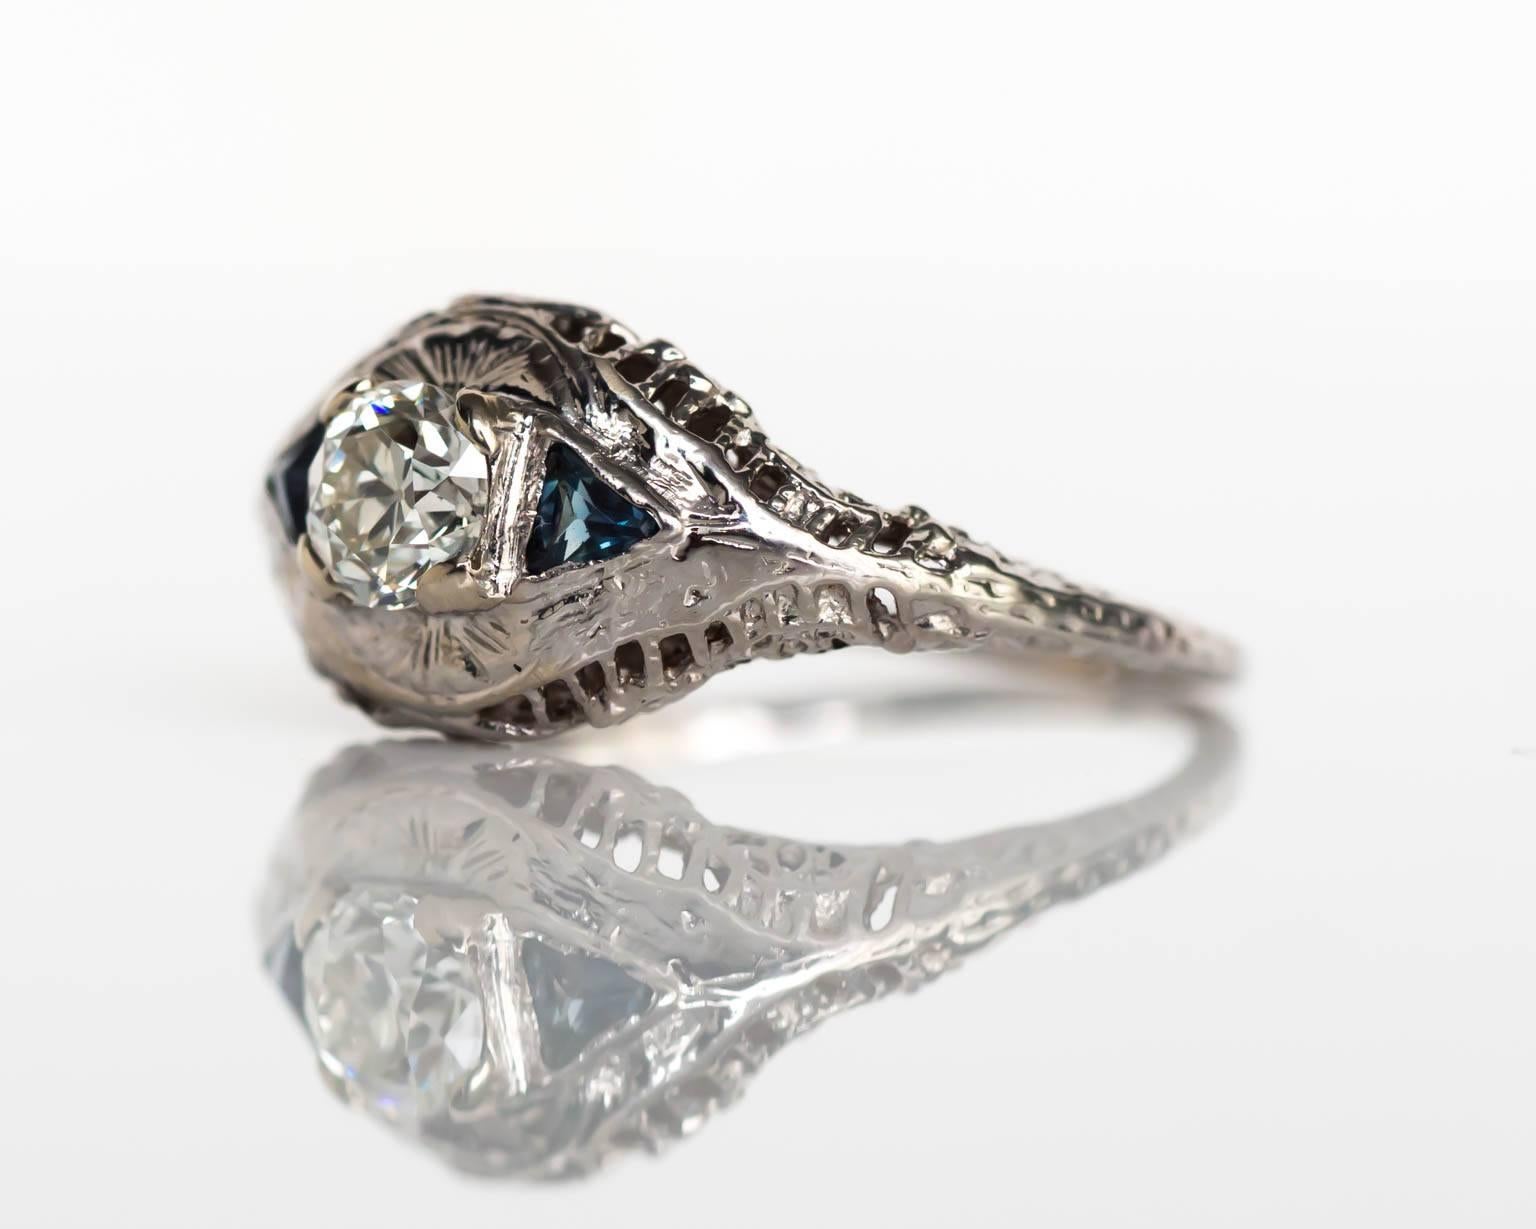 1920s Art Deco 18K White Gold GIA Certified .44 Carat Diamond Engagement Ring with Blue Sapphires & Filigree Work

Item Details: 
Ring Size: 5.5
Metal Type: 18 Karat White Gold
Weight: 2.5 grams

Center Diamond Details
GIA CERTIFIED Center